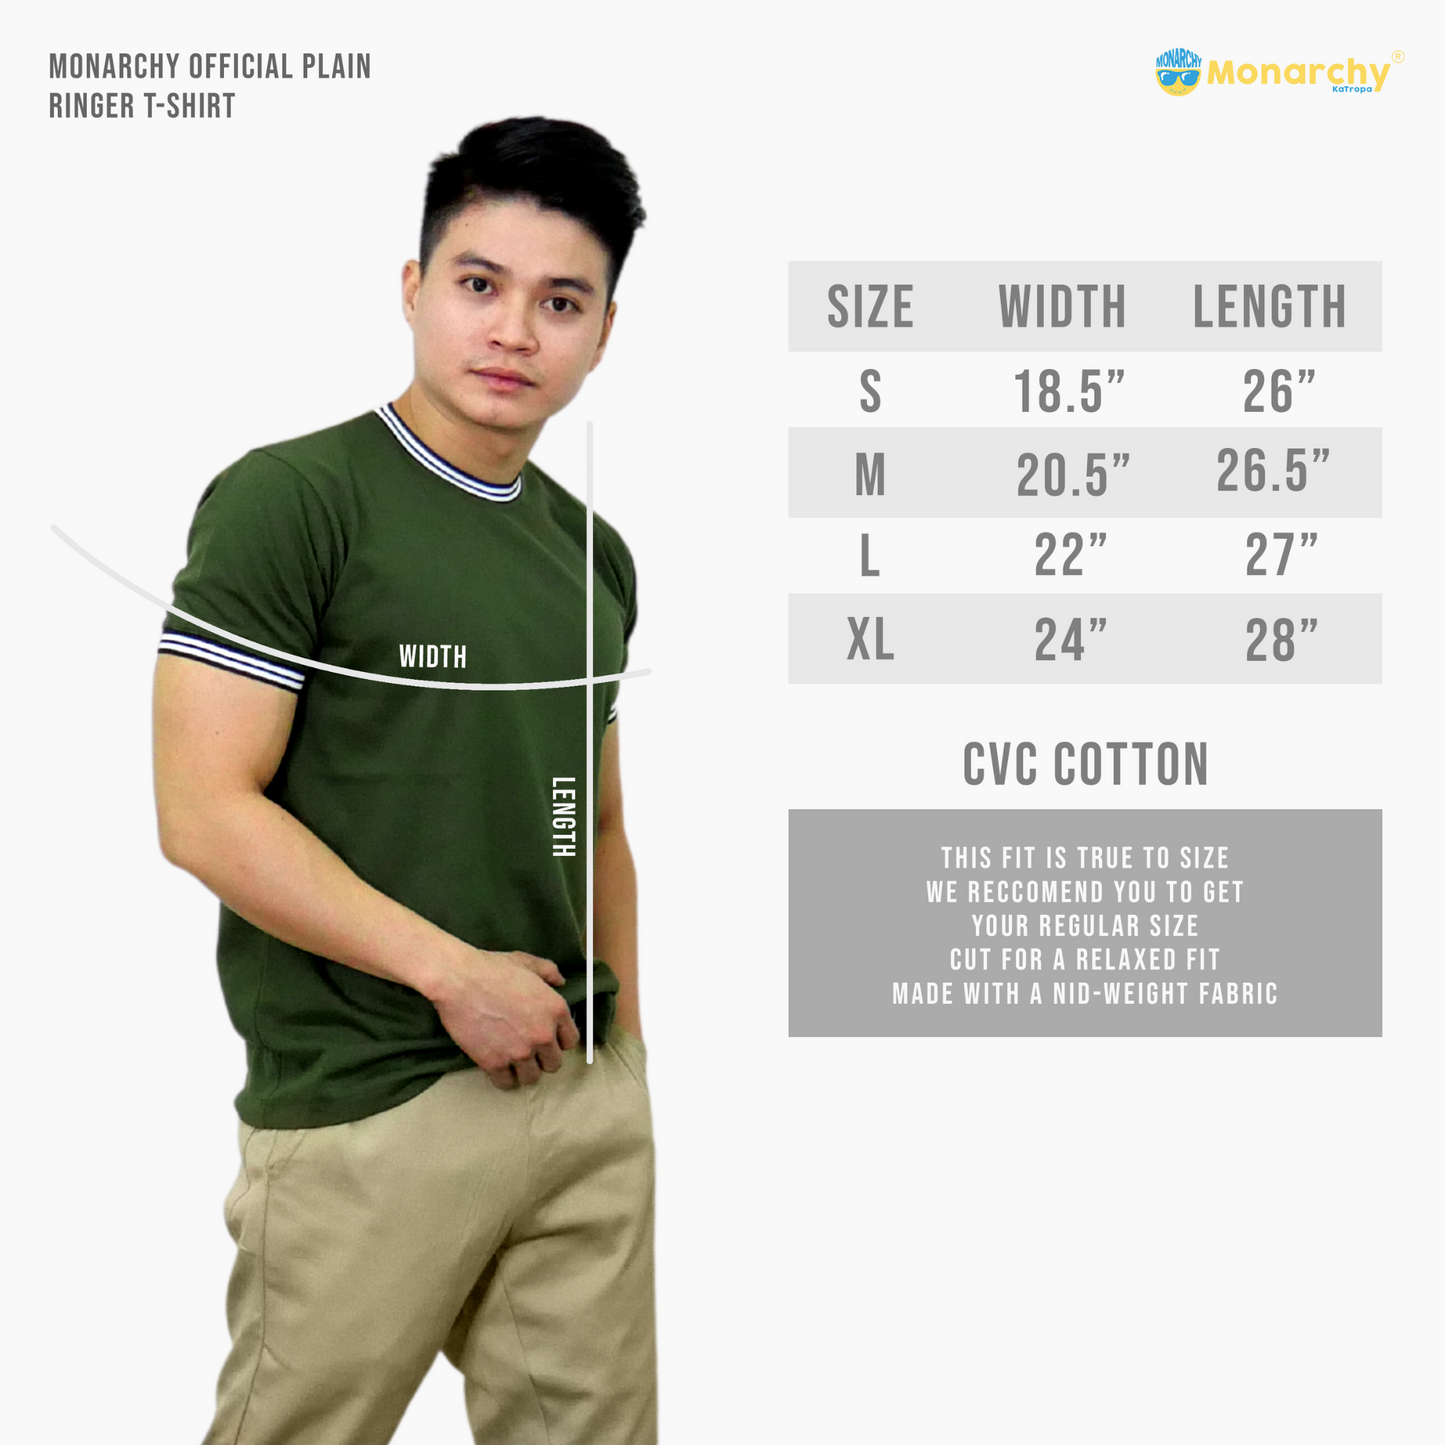 Monarchy Official Plain Ringer Shirt | tshirt for men